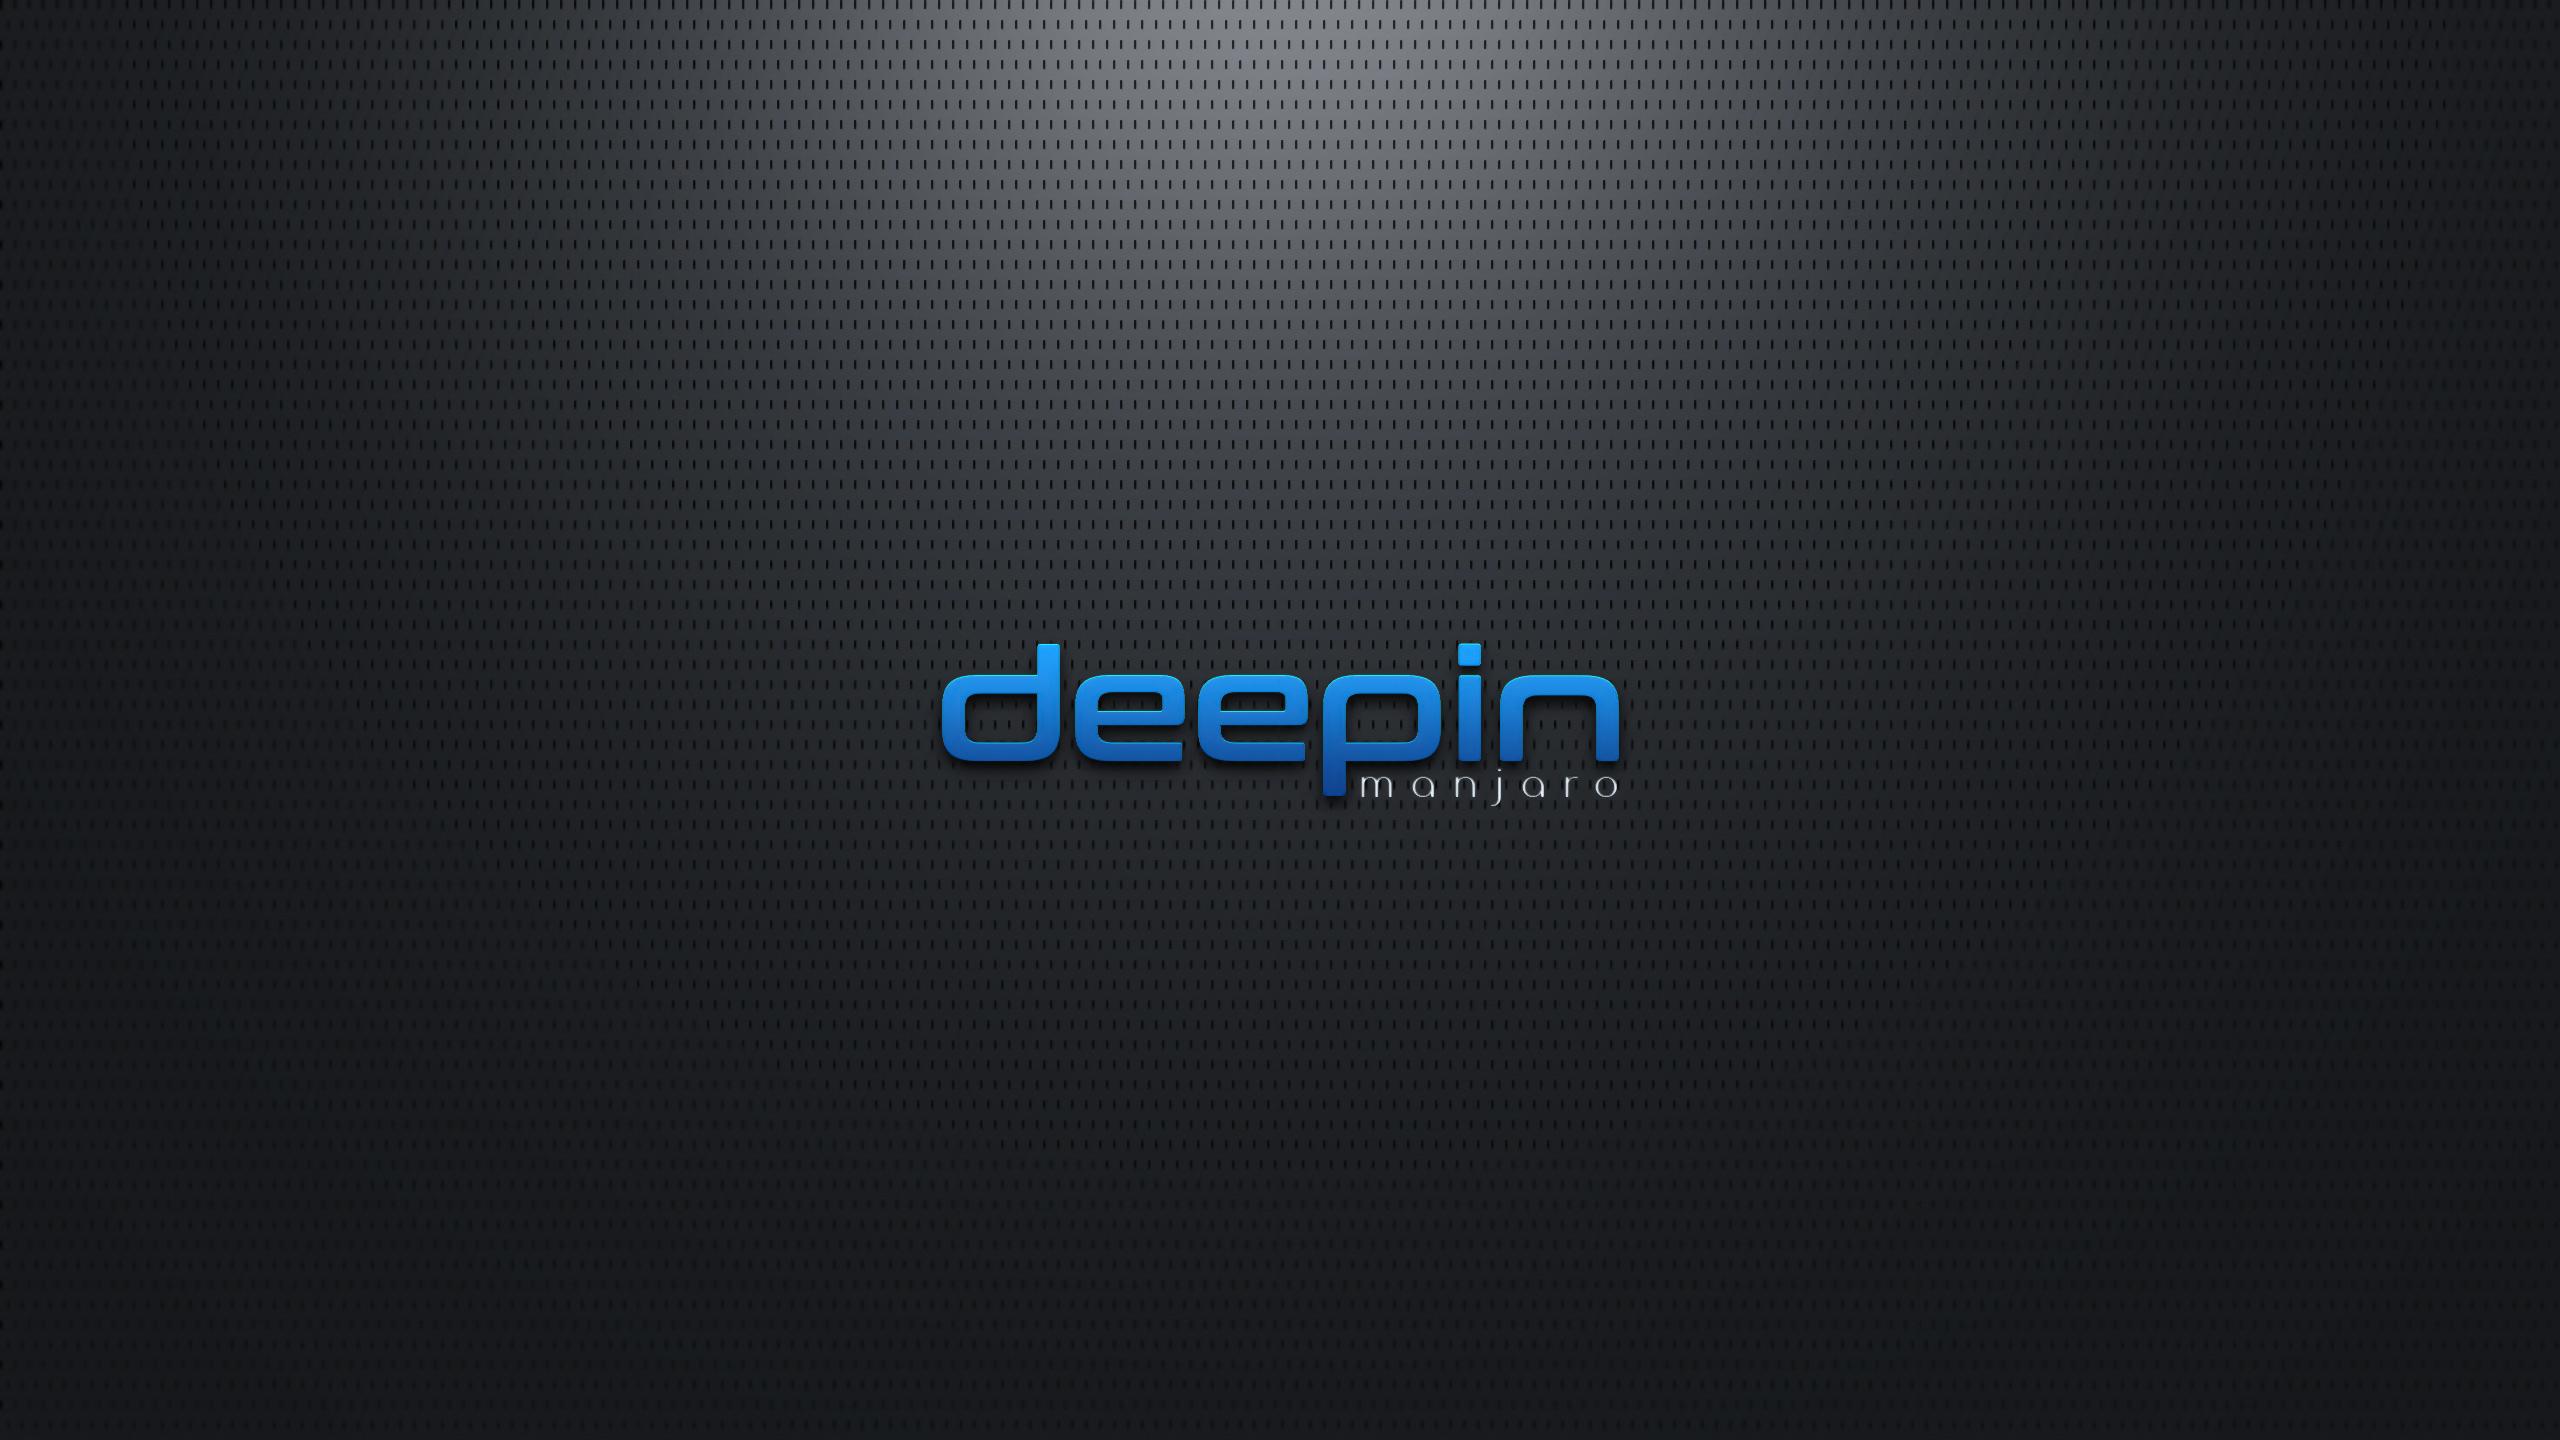 Deepin Wallpaper Linux Forum